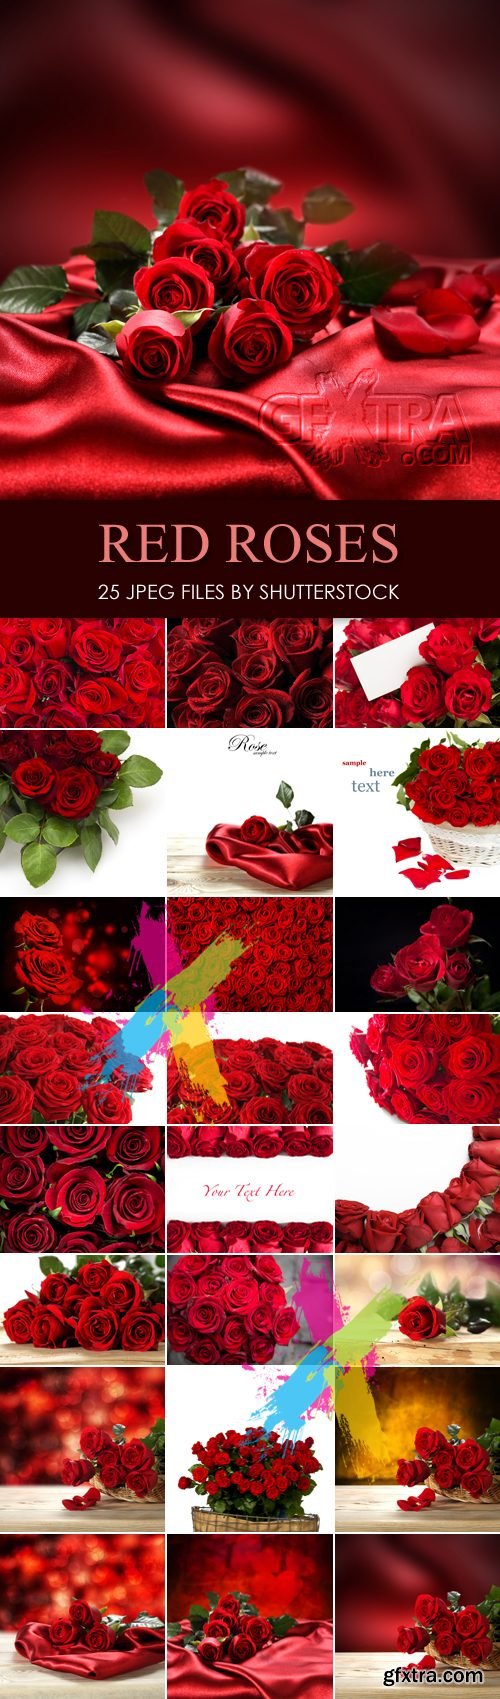 Stock Photo - Amazing Red Roses